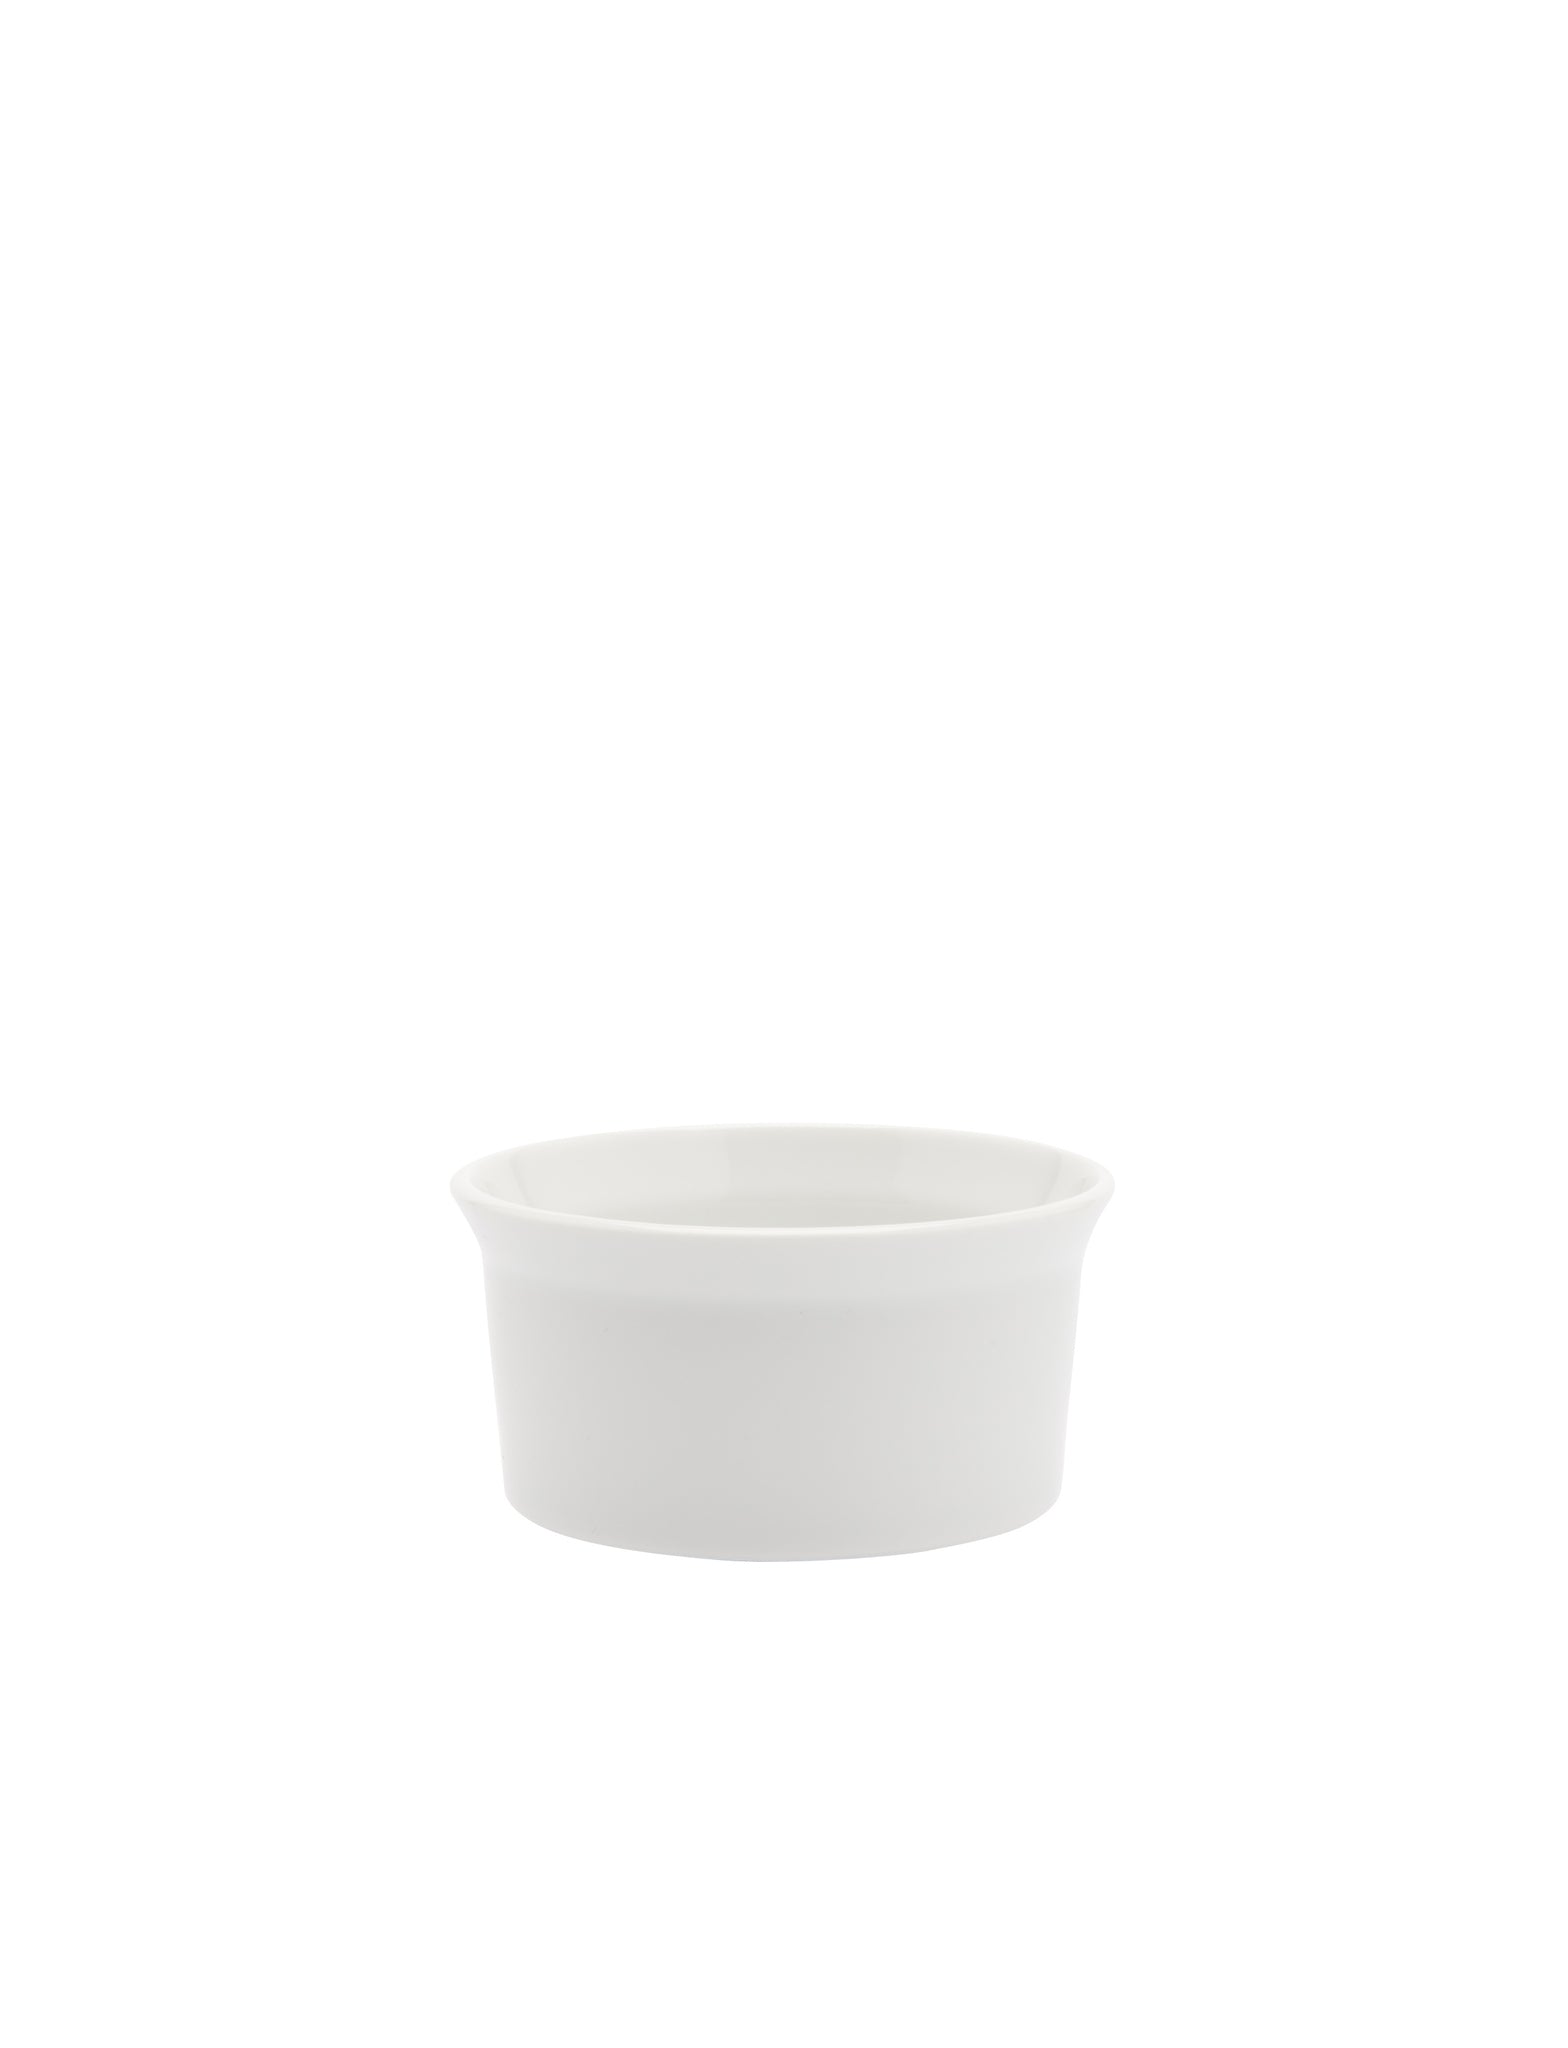 TY Tea Cup glazed white